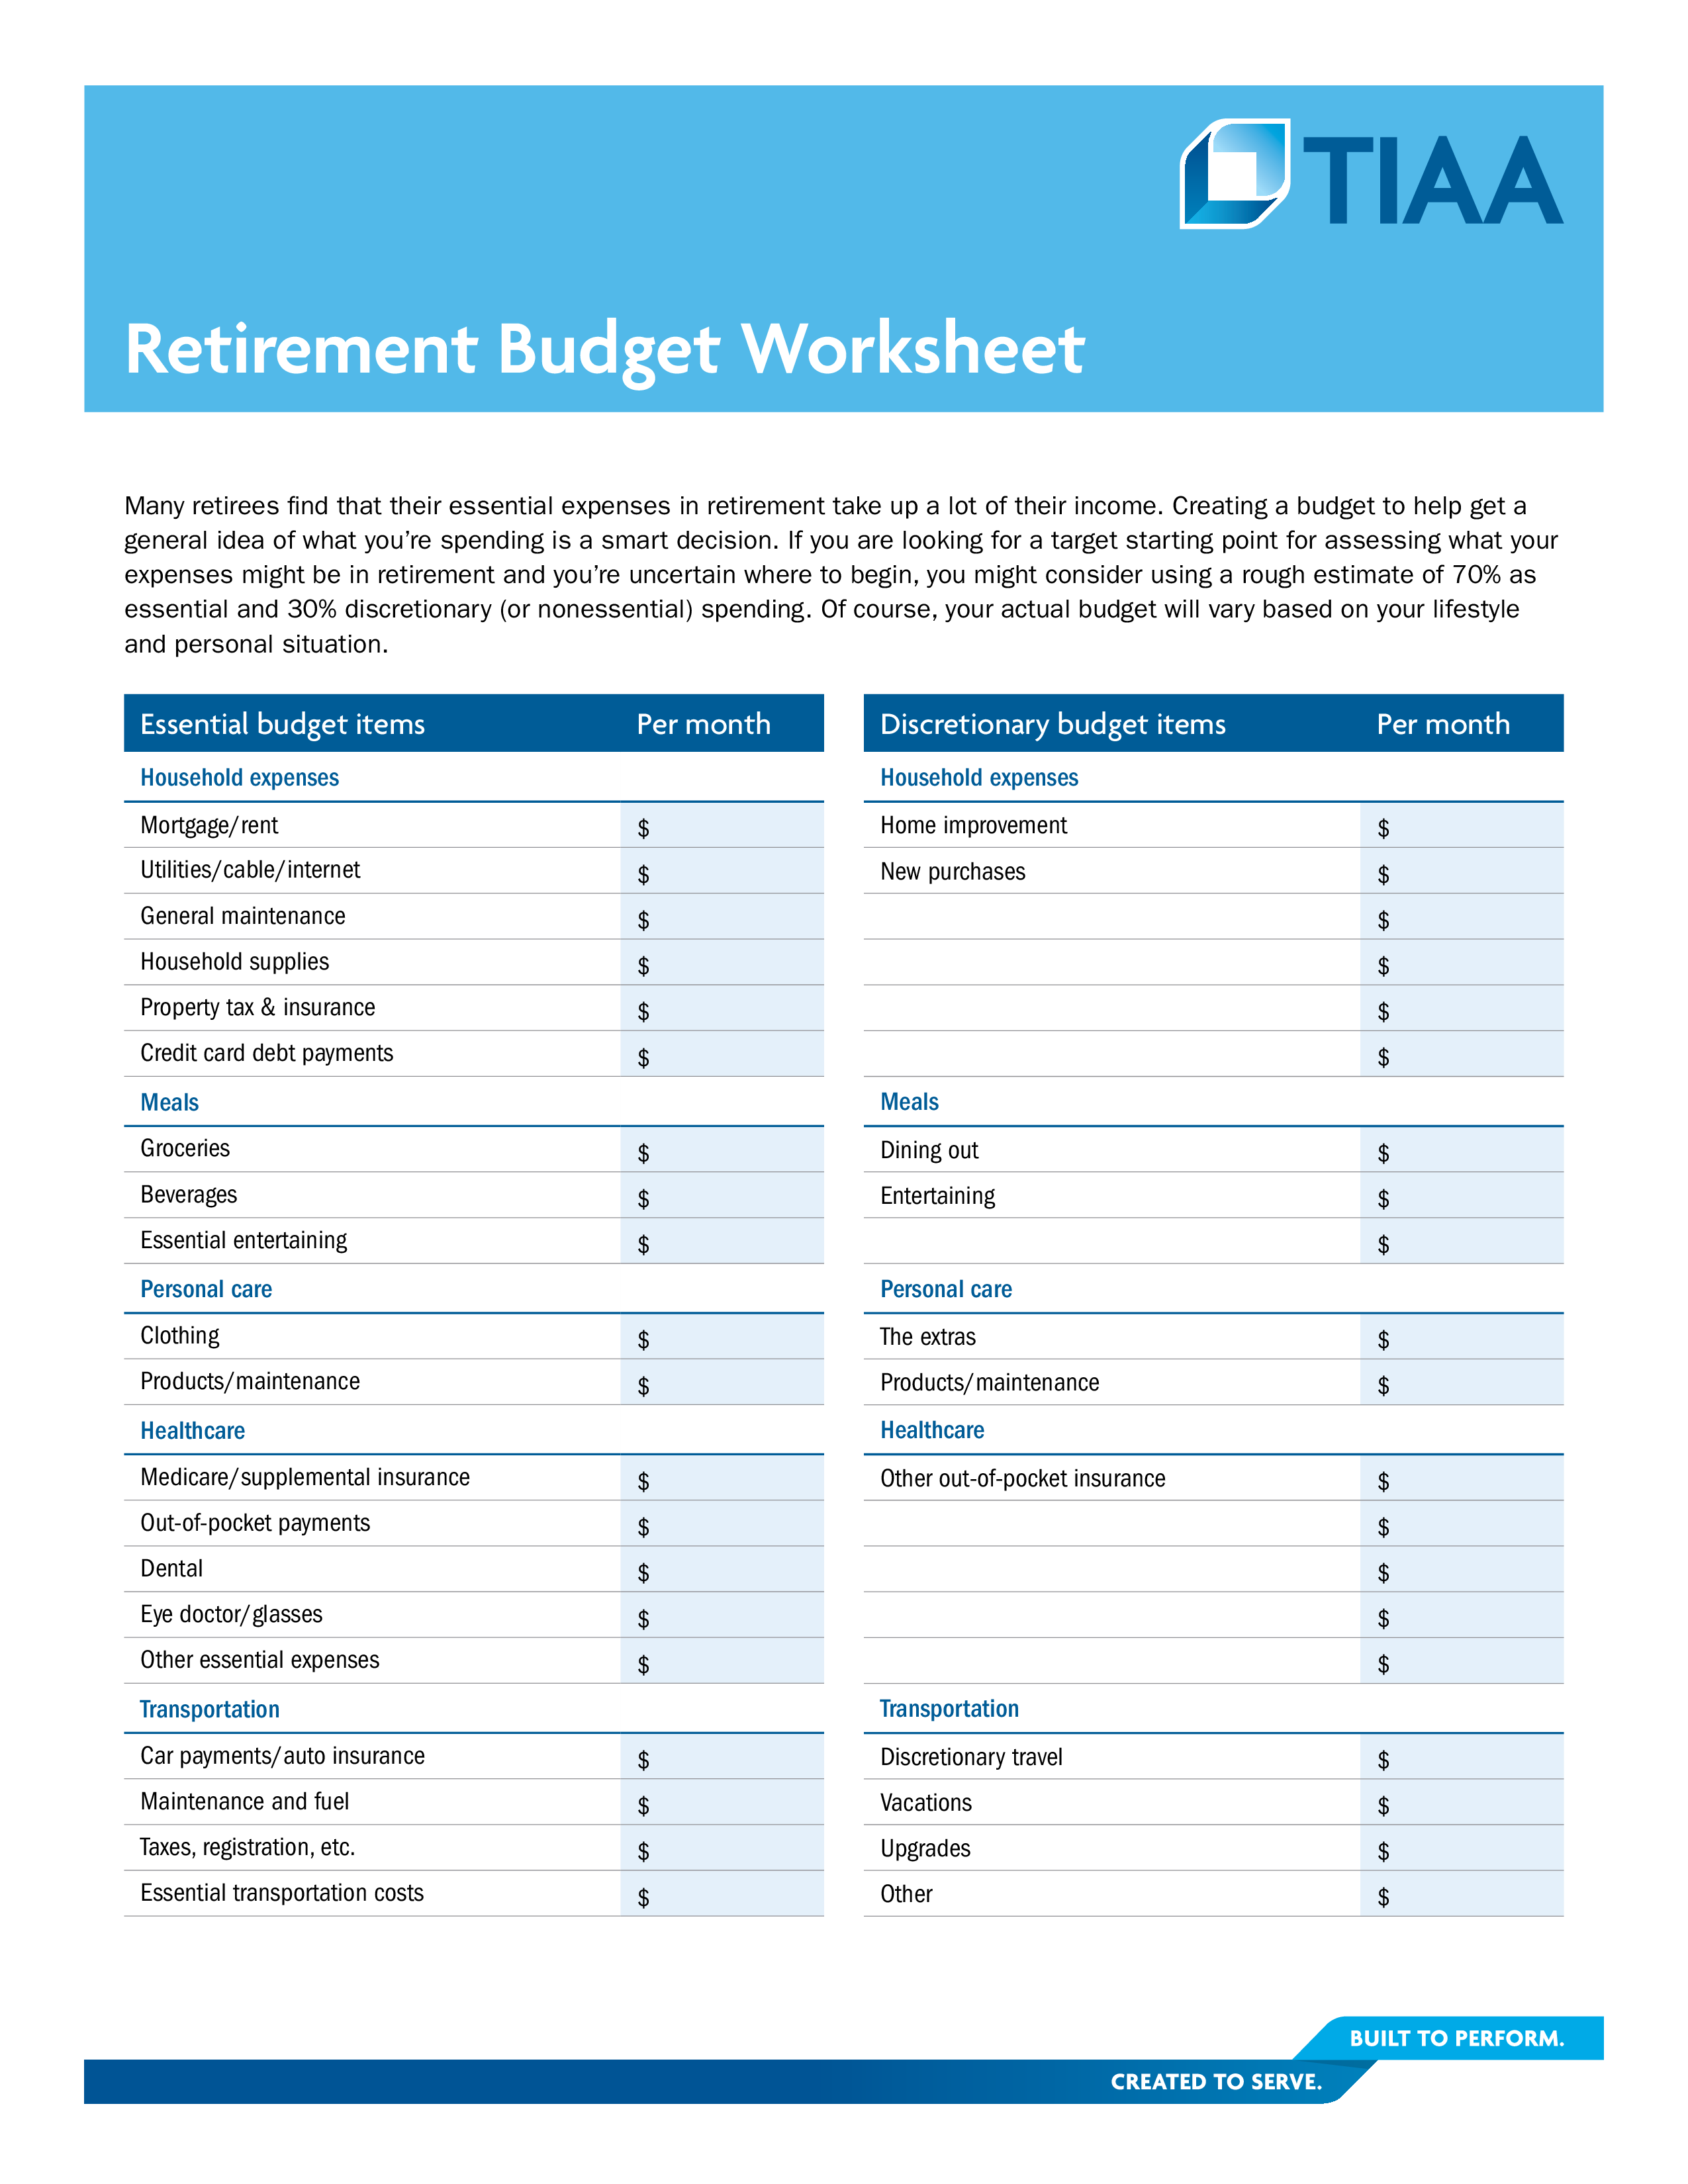 Retirement Budget Worksheet Templates at